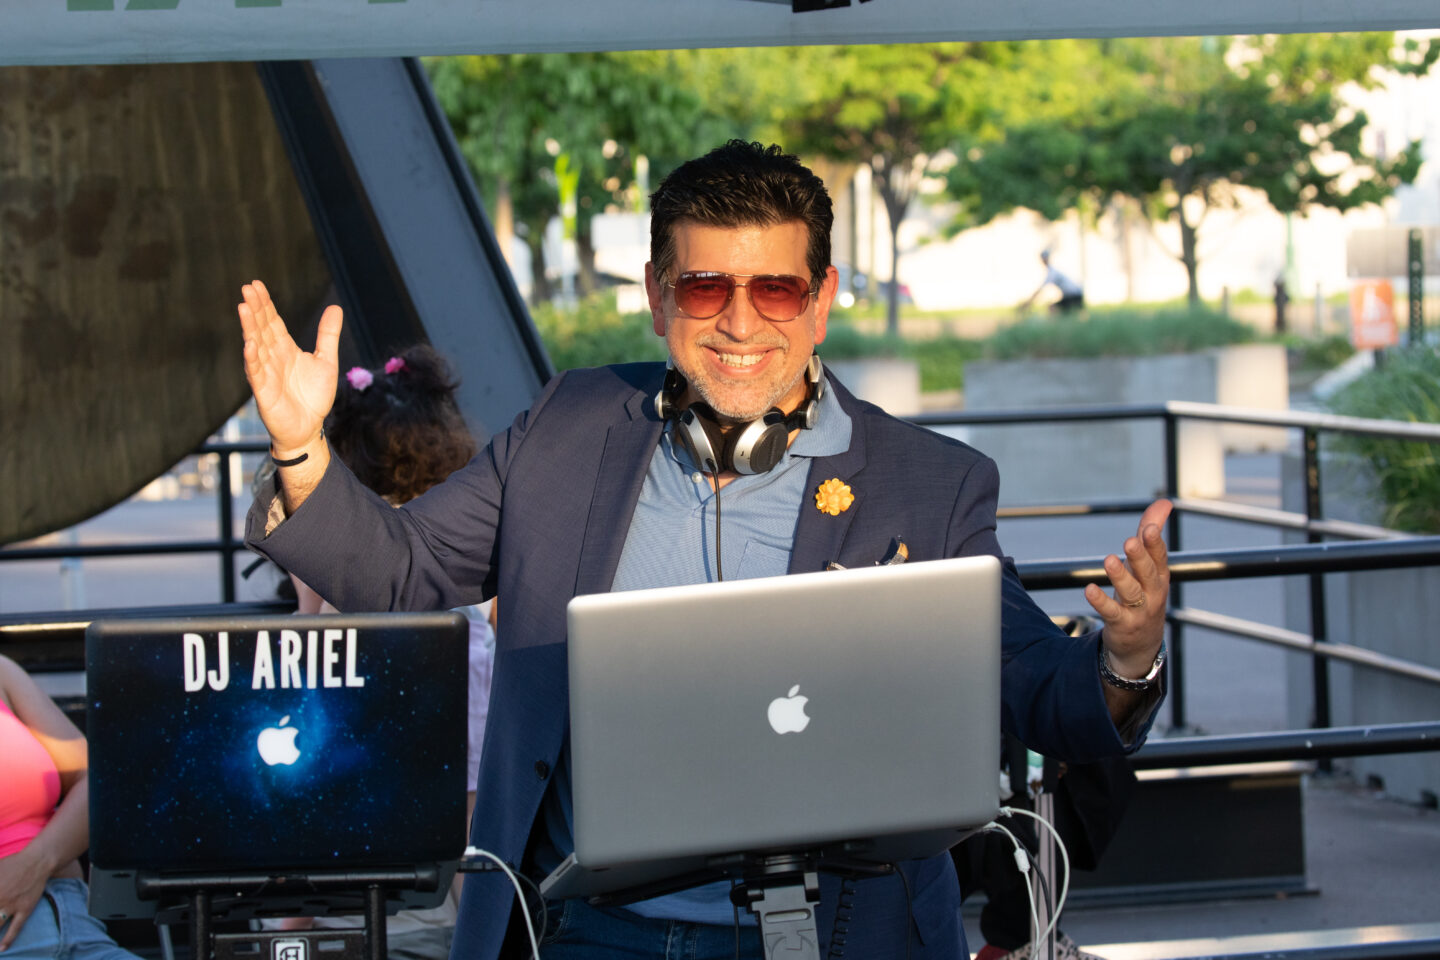 DJ Ariel smiles behind laptop at Pier 76 for Sunset Salsa